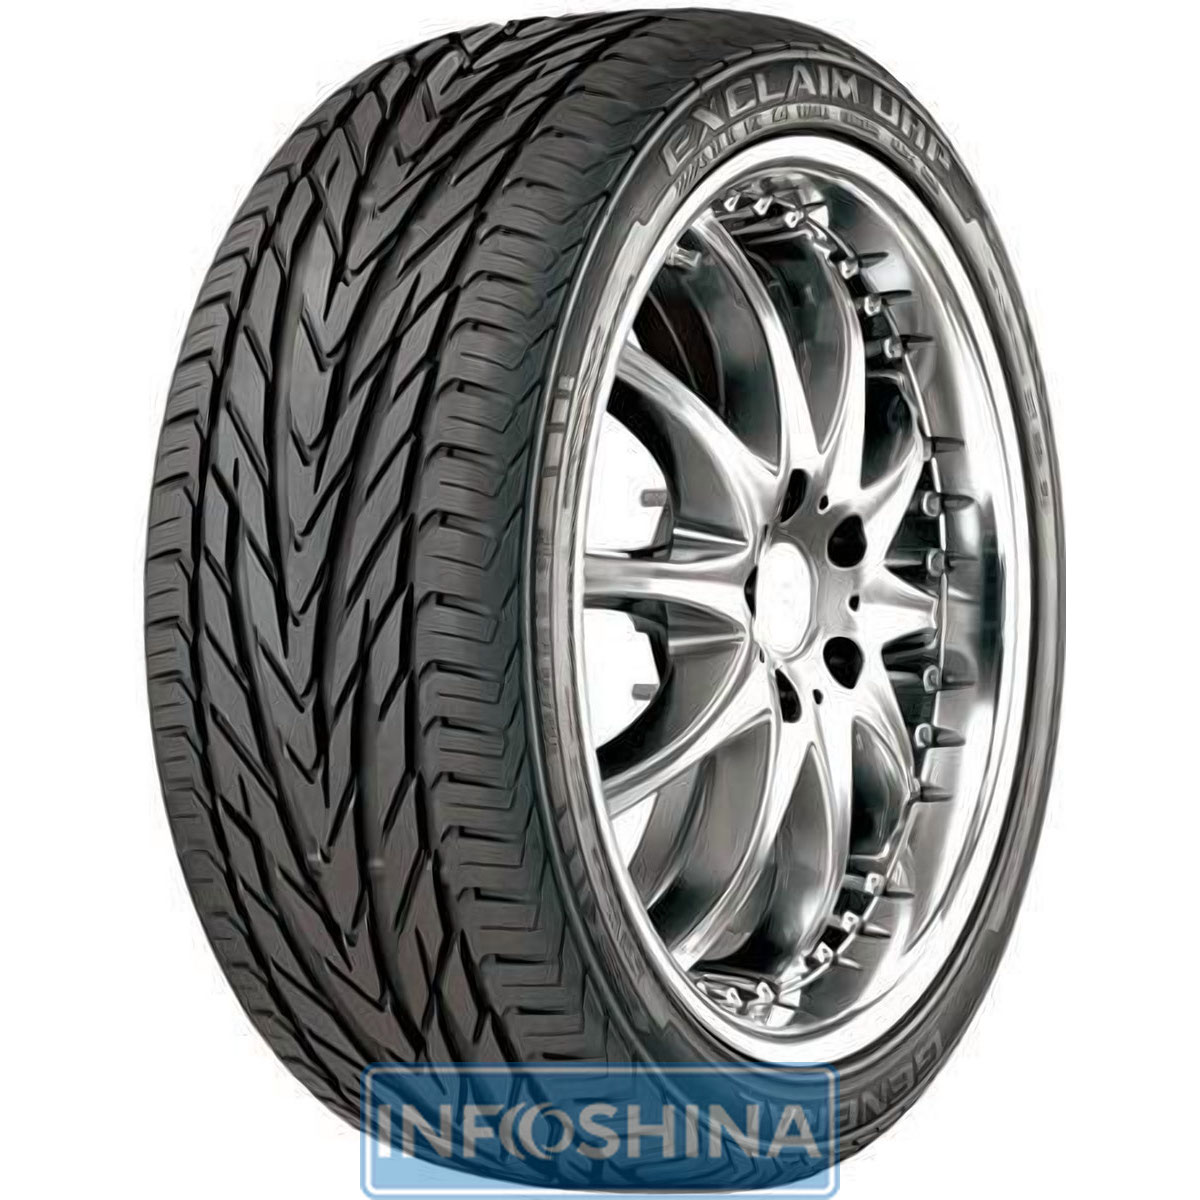 Купить шины General Tire Exclaim UHP 285/30 R20 101W